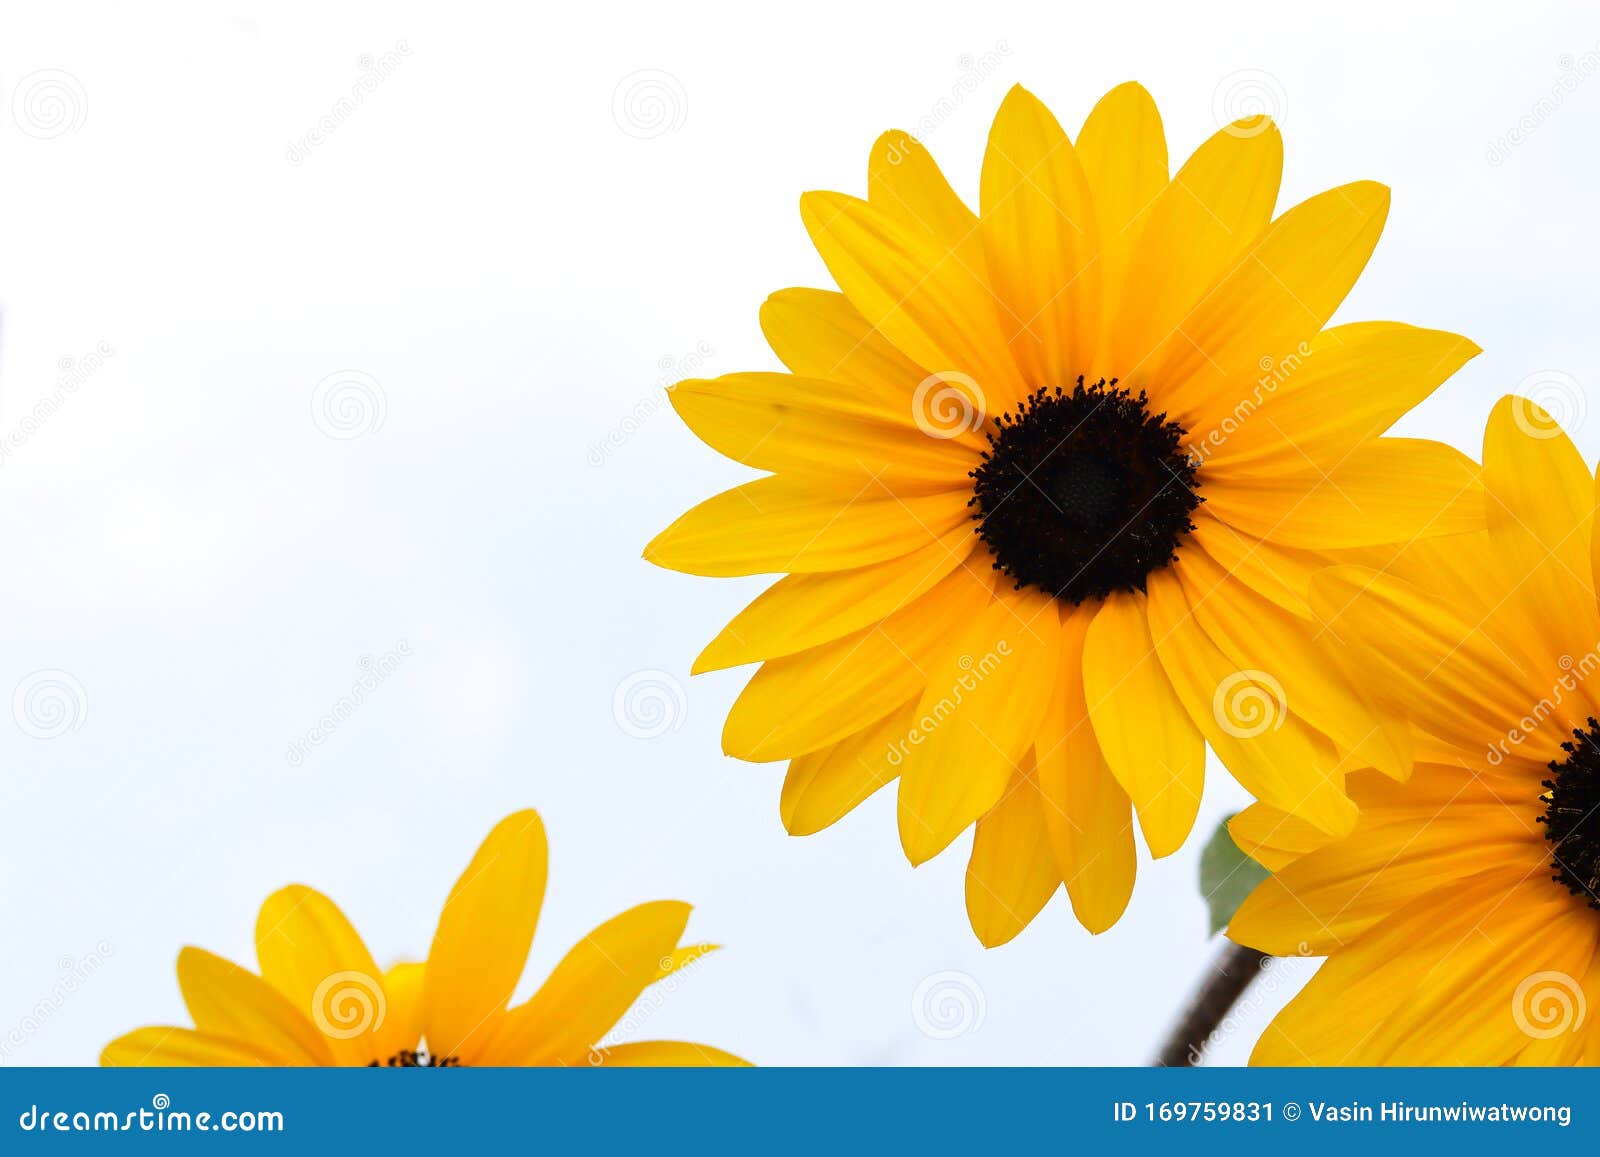 yellow flowers, black eyed susan or rudbeckia flower